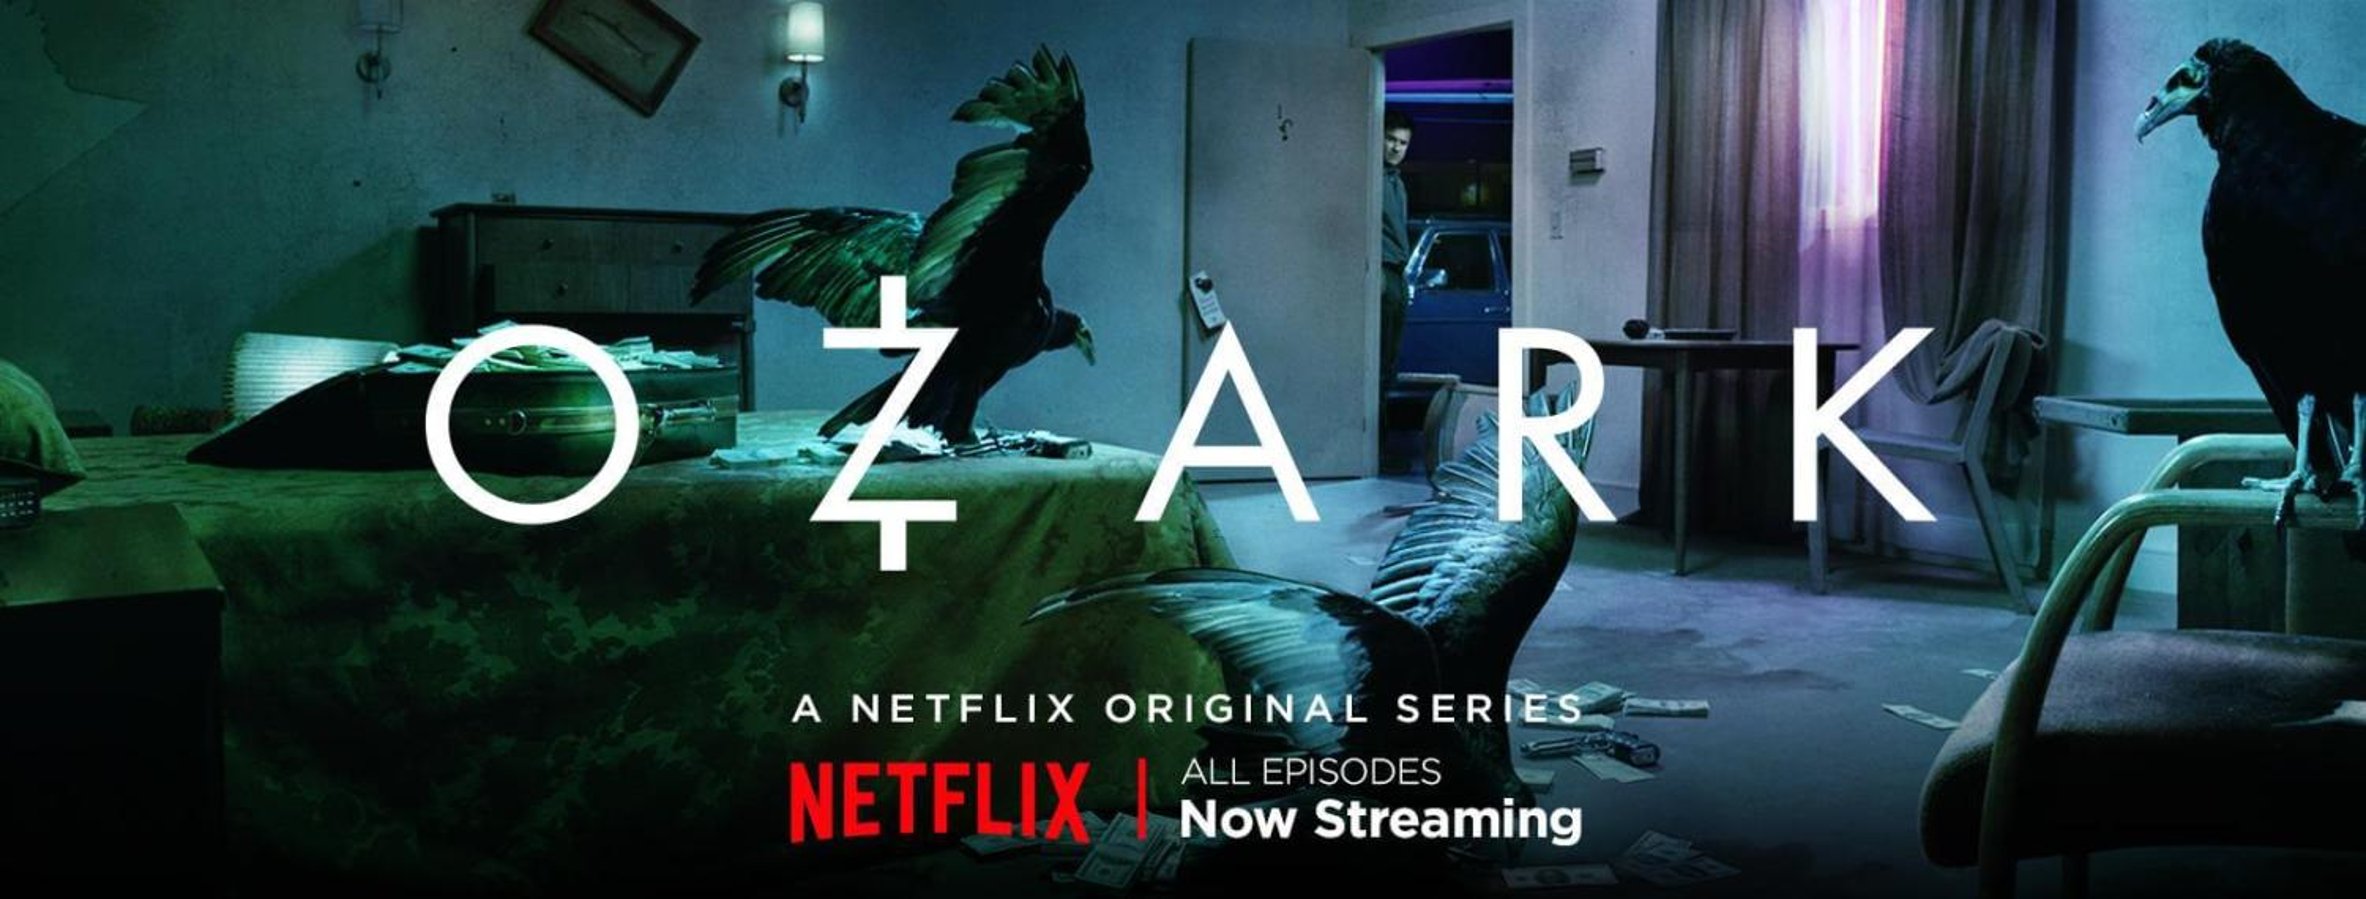 Netflix's Ozark casting for Upscale Shoppers!